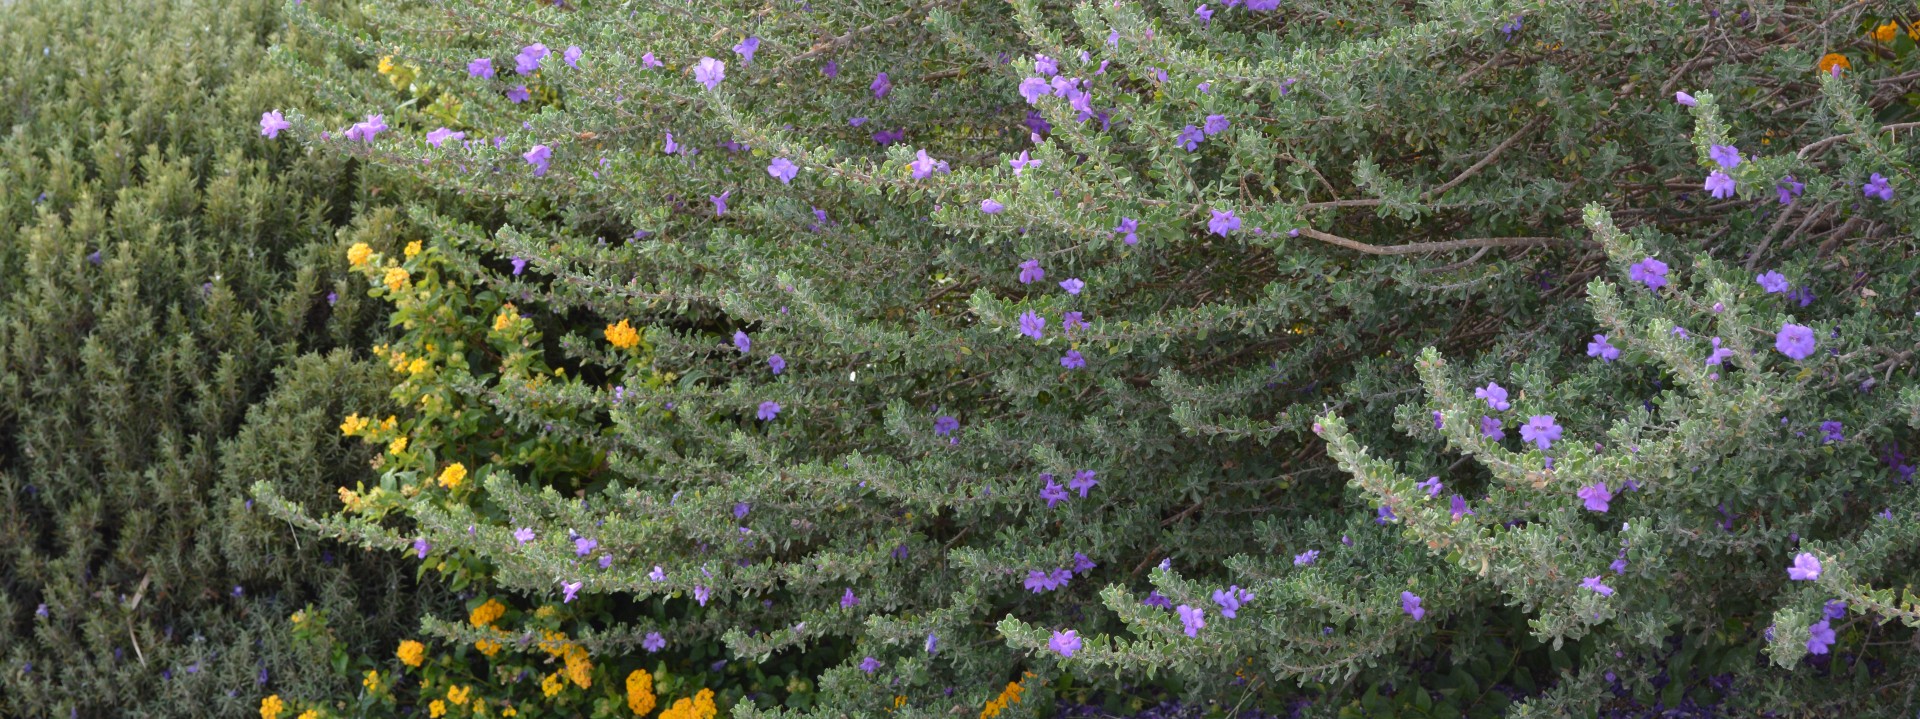 flowers yellow purple free photo